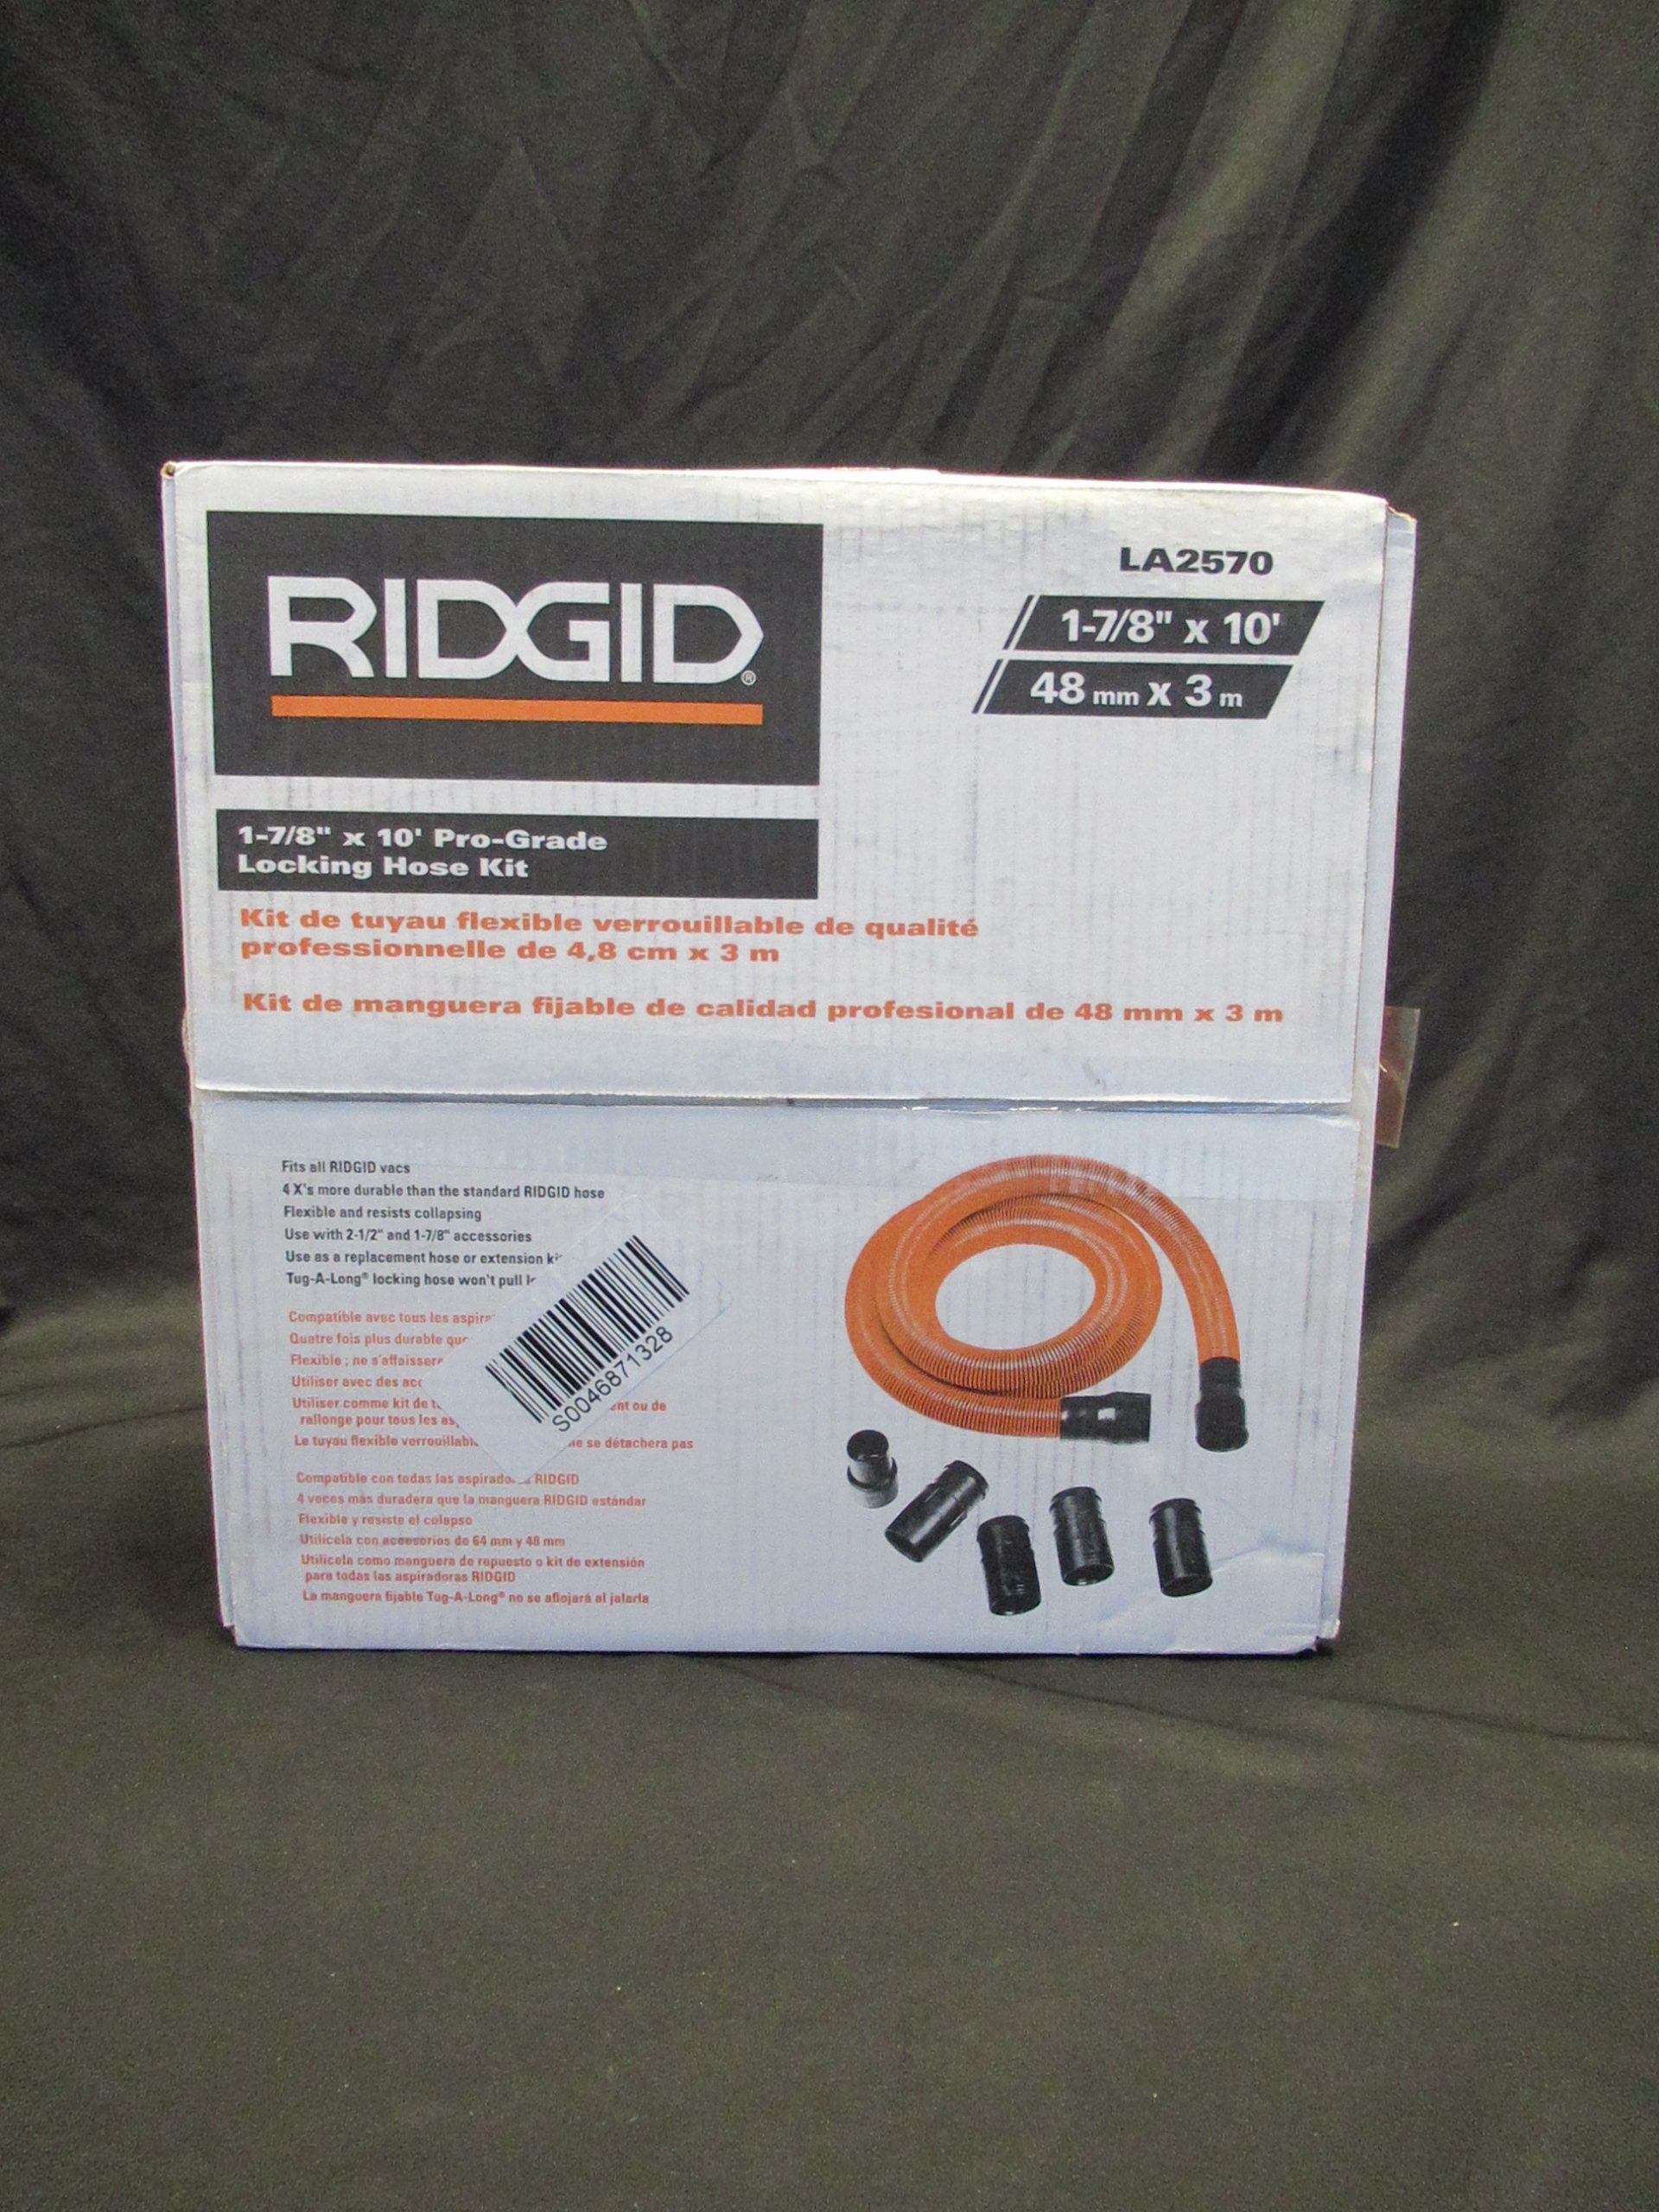 Ridgid 1 7 8 In X 10 Ft Pro Grade Locking Vacuum Hose Kit For Ridgid Wet Dry Shop Vacuums The Resale Source